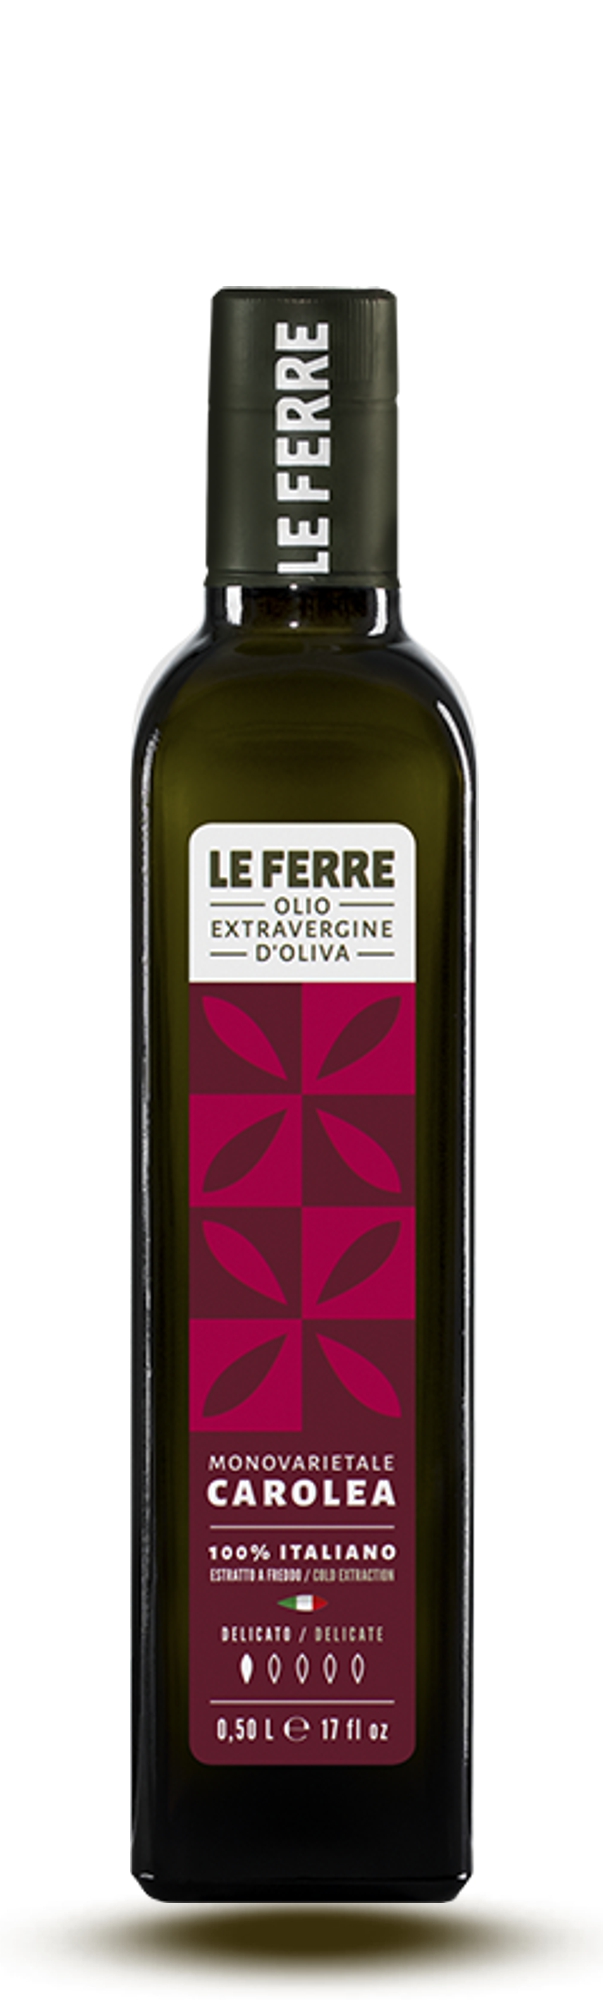 Le Ferre, CAROLEA Monovarietale olio extravergine d'oliva 500 ml 